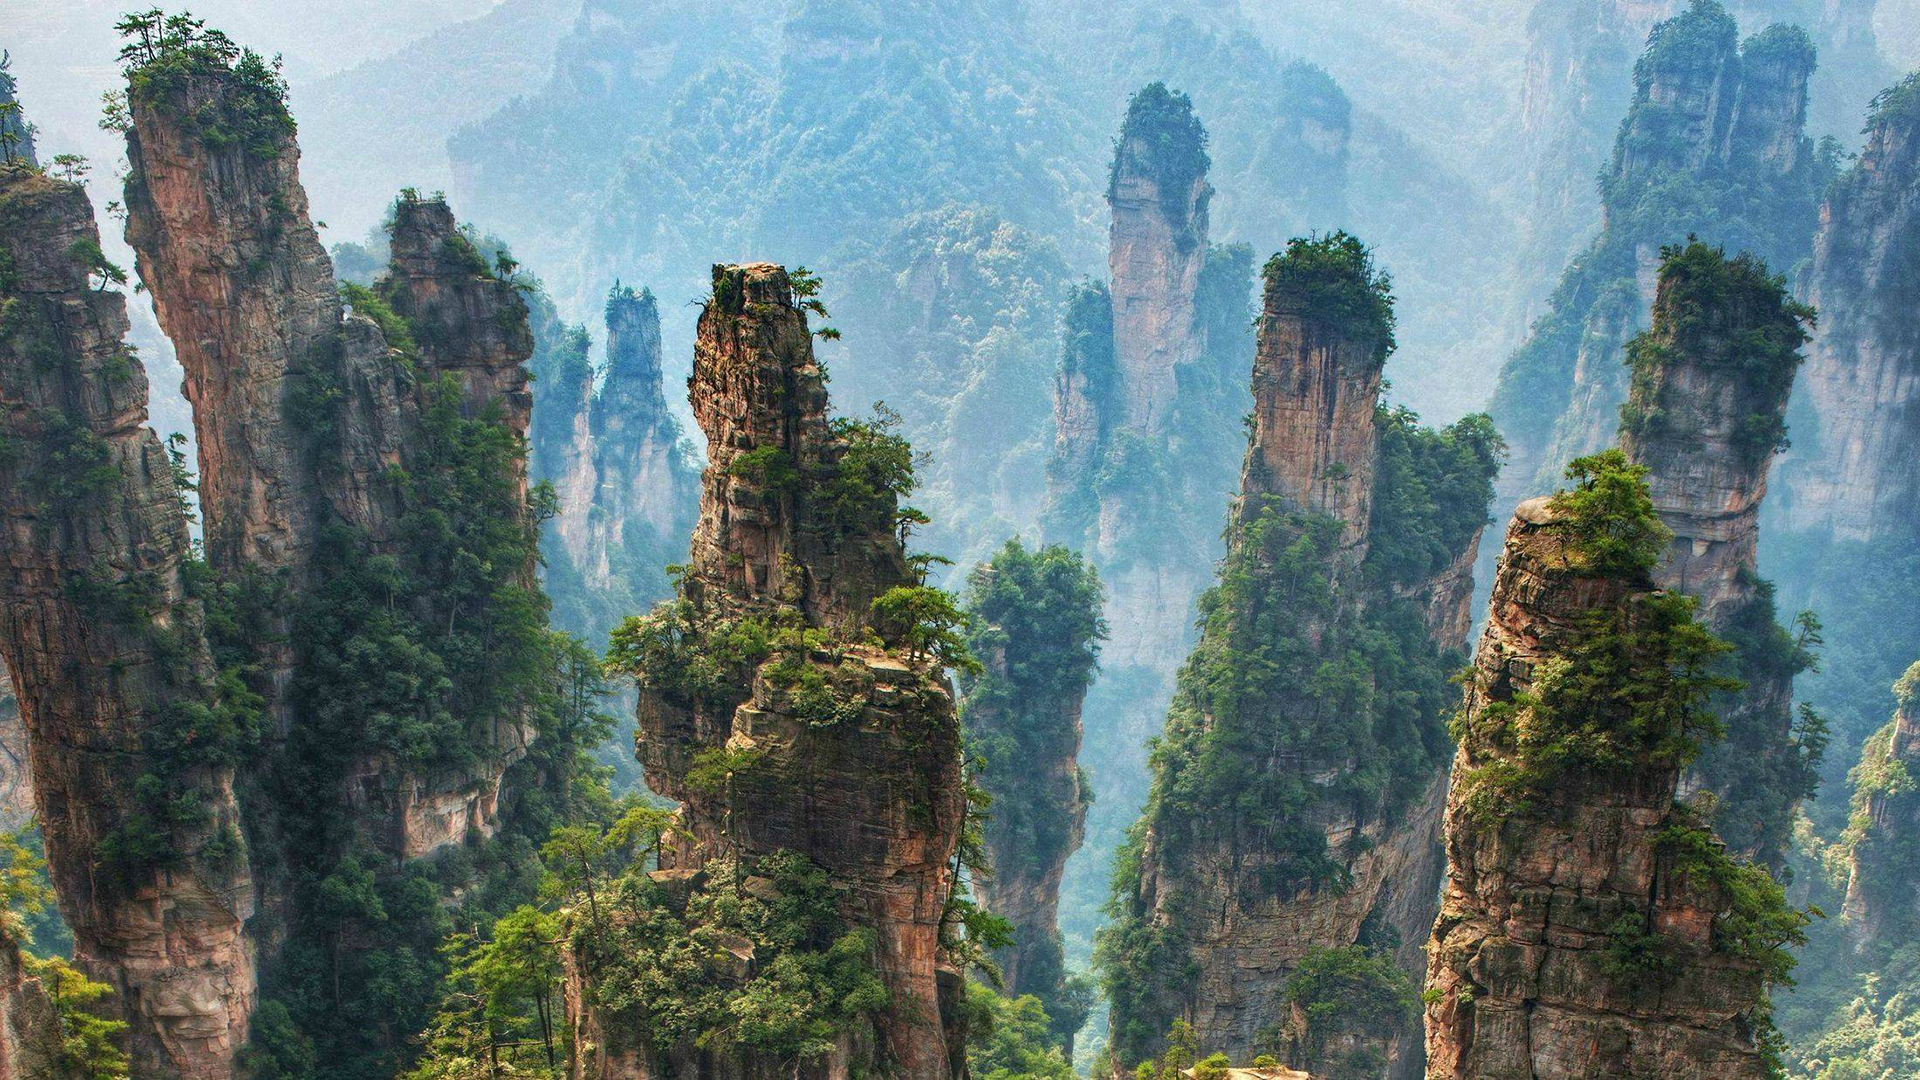 Zhangjiajie National Park - Avatar's Hallelujah Mountains on Earth